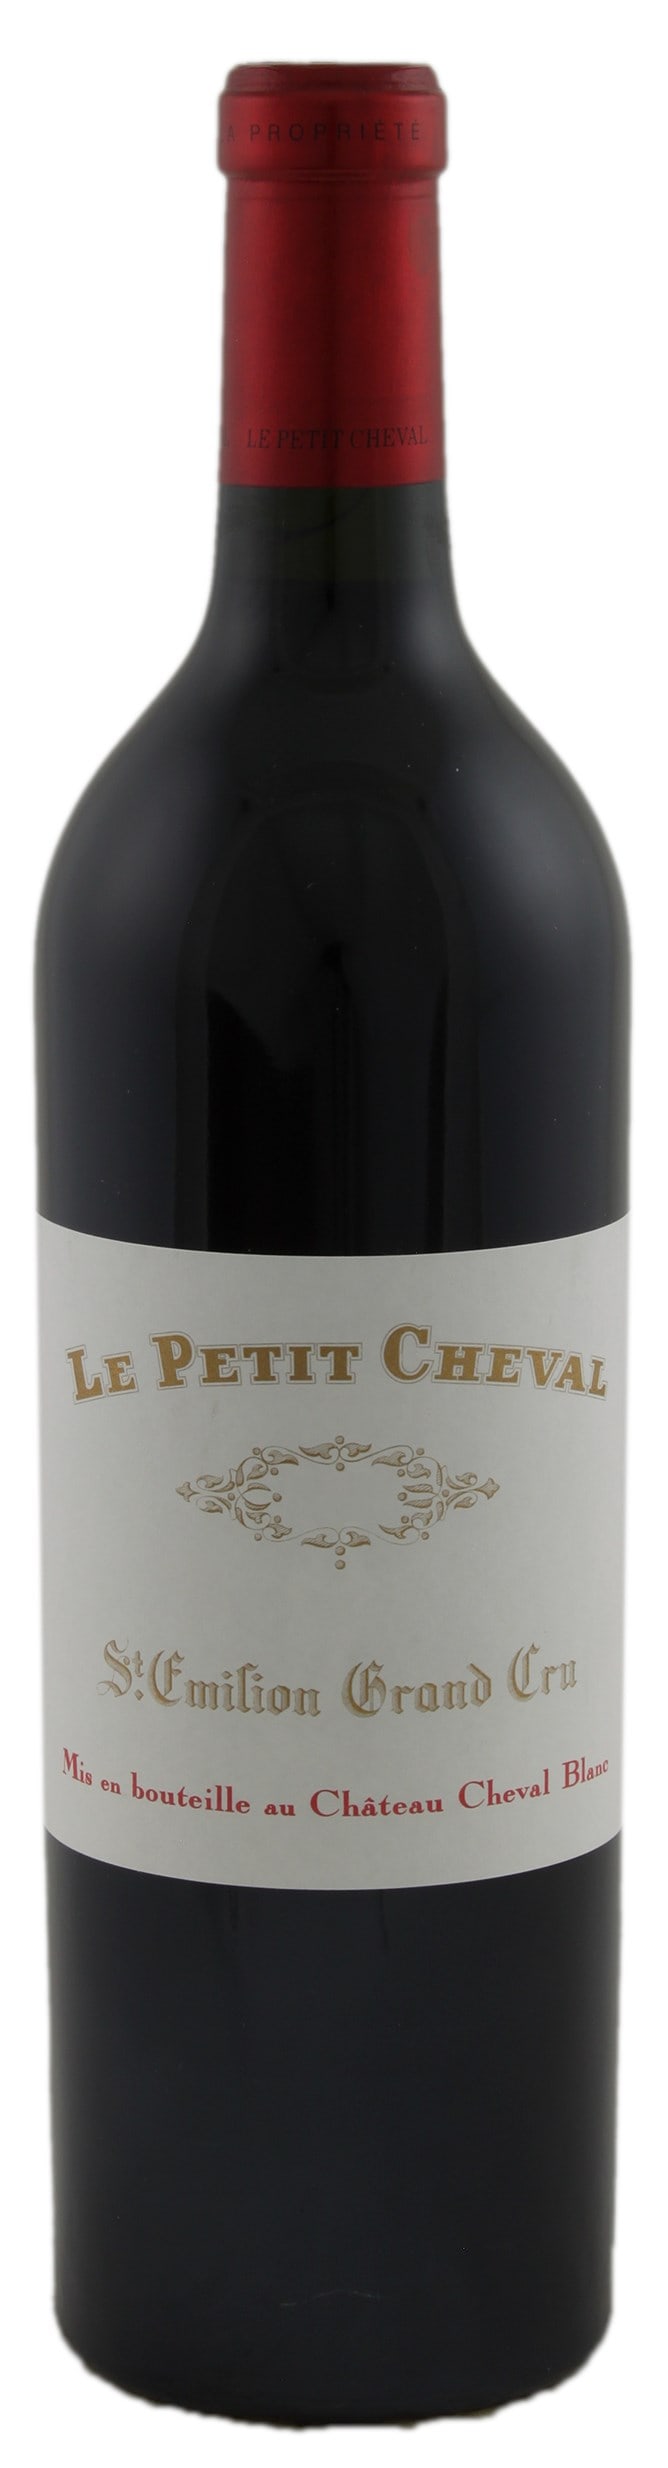 Chateau Cheval Blanc - Le Petit Cheval 2010 (750ml) (750ml)